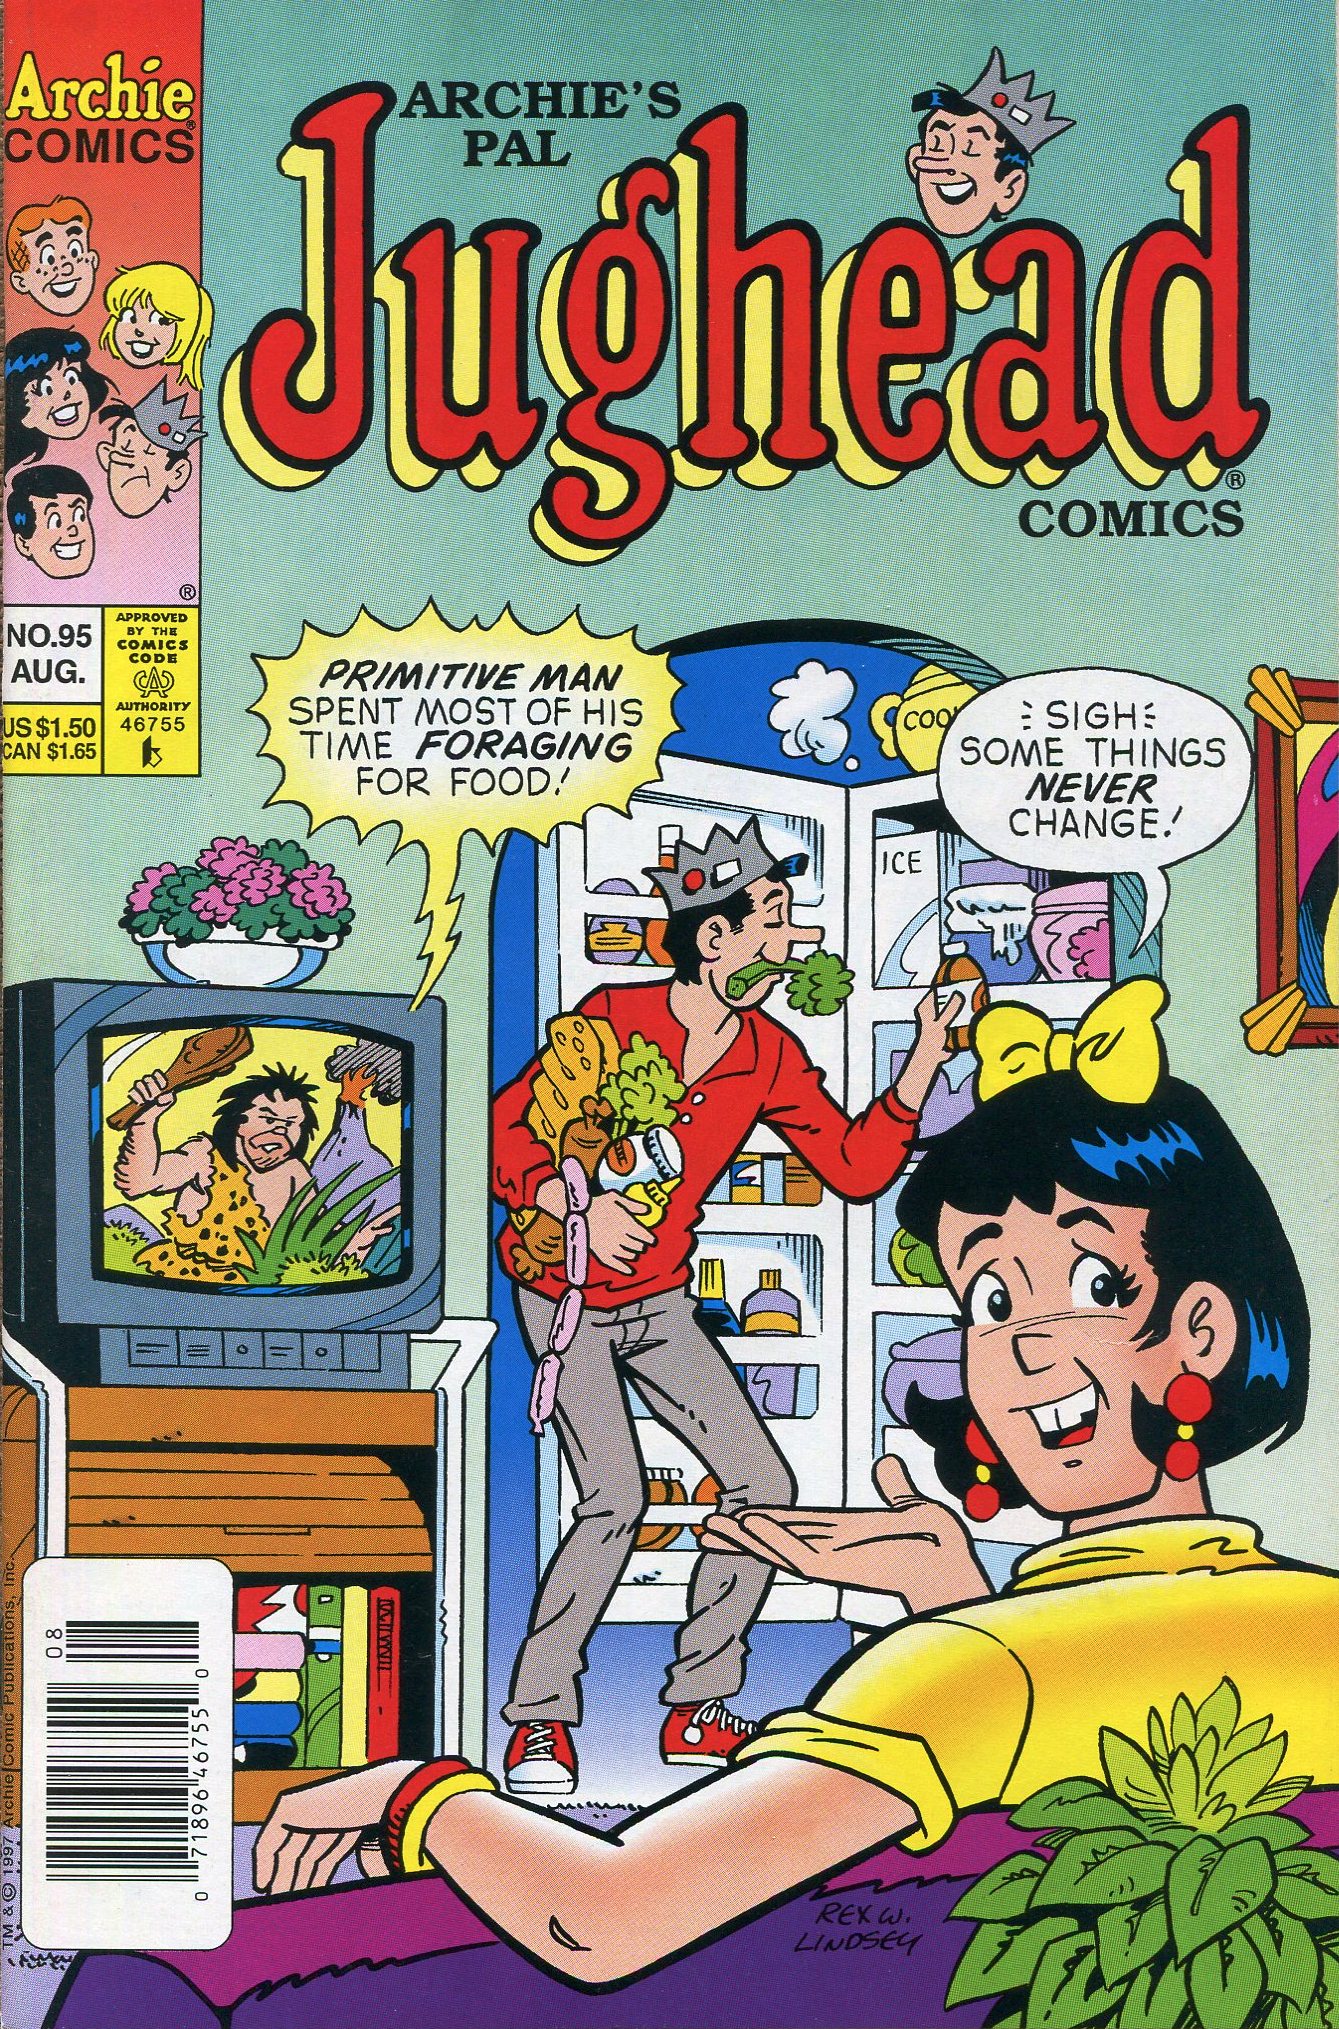 Read online Archie's Pal Jughead Comics comic -  Issue #95 - 1